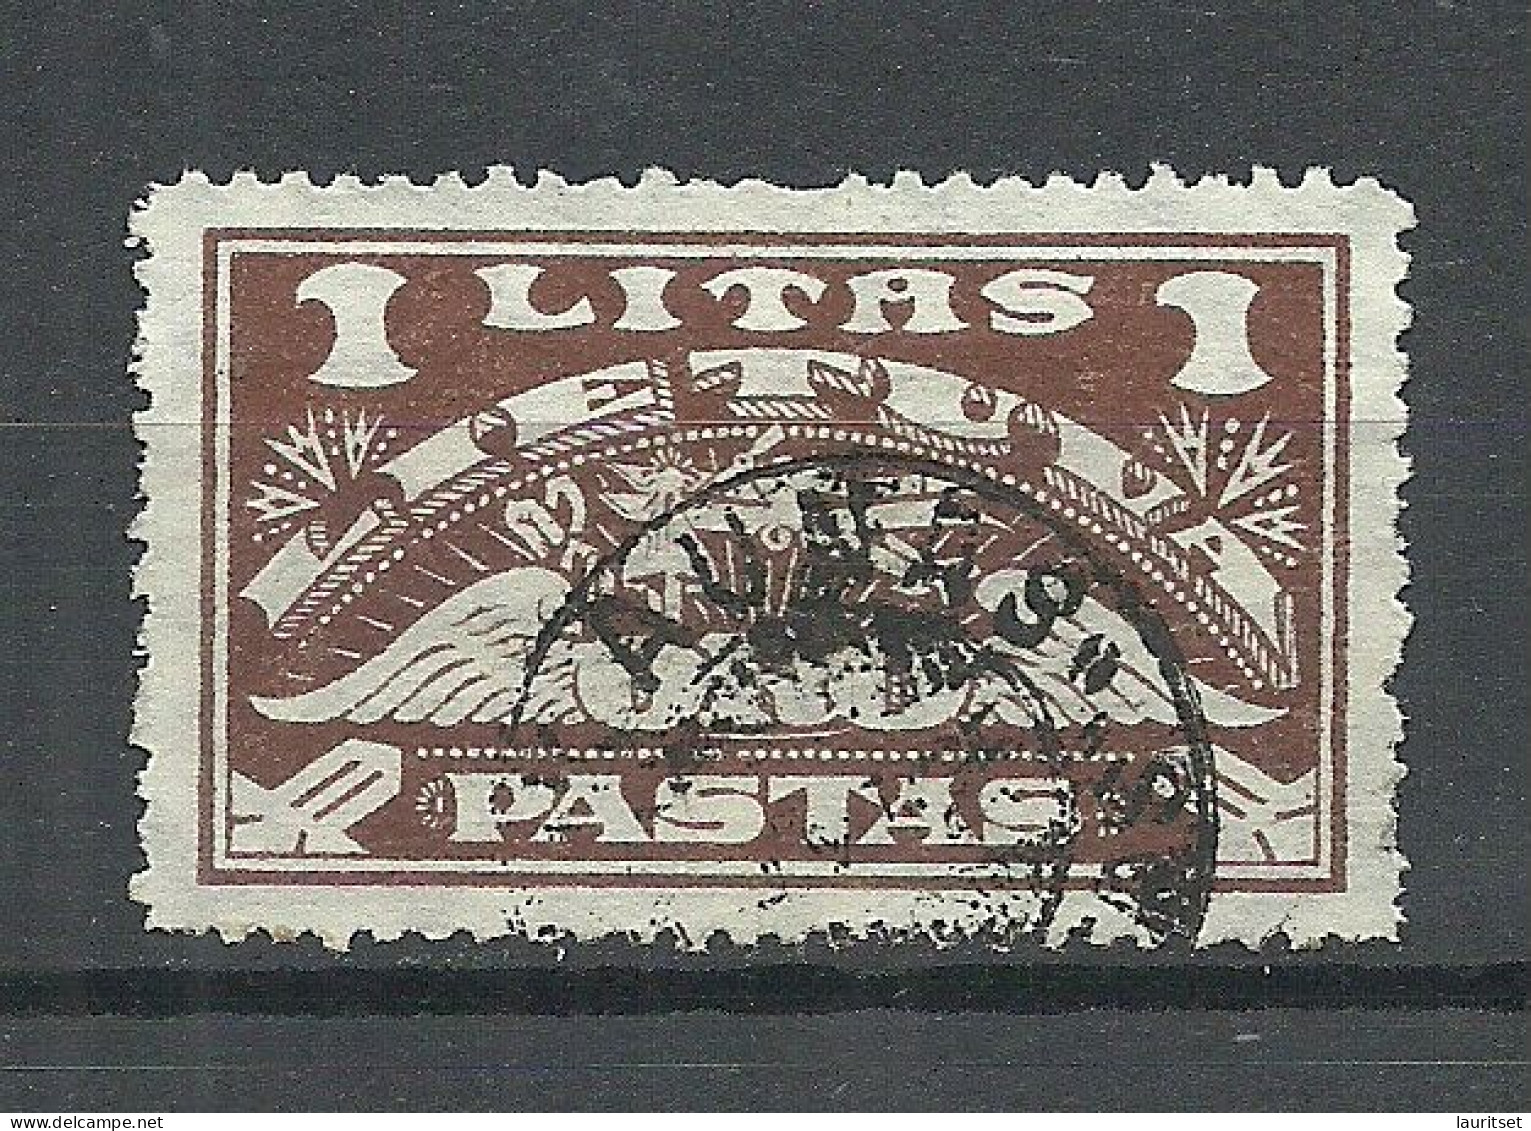 LITAUEN Lithuania 1924 O KAUNAS Michel 223 - Lithuania